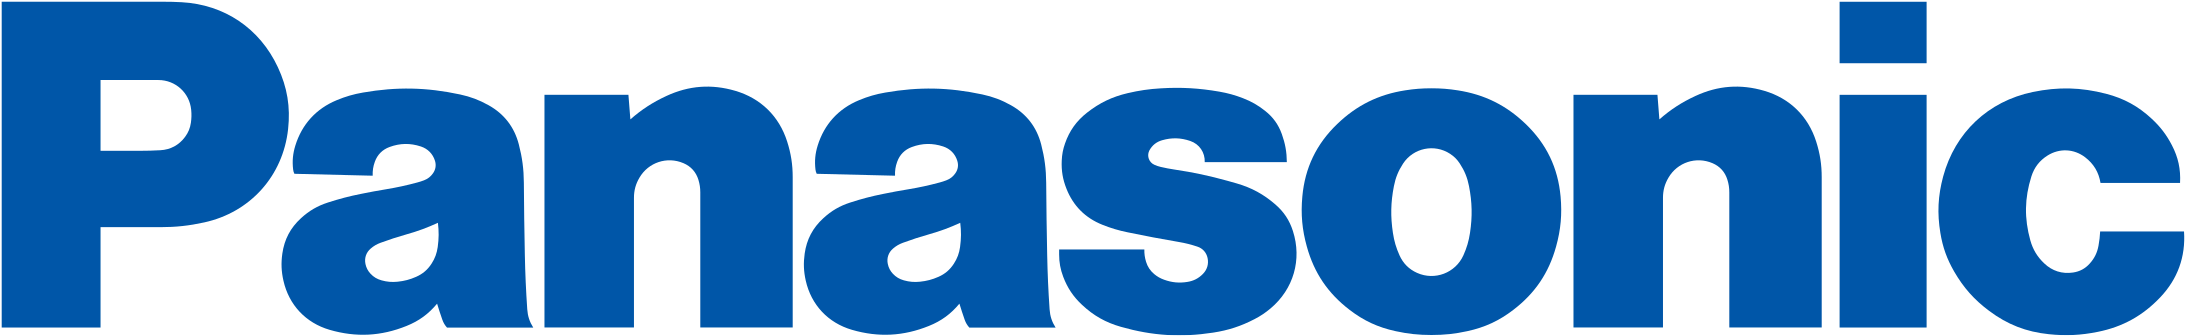 Logo de Panasonic - Clientes Analytics Plus - México